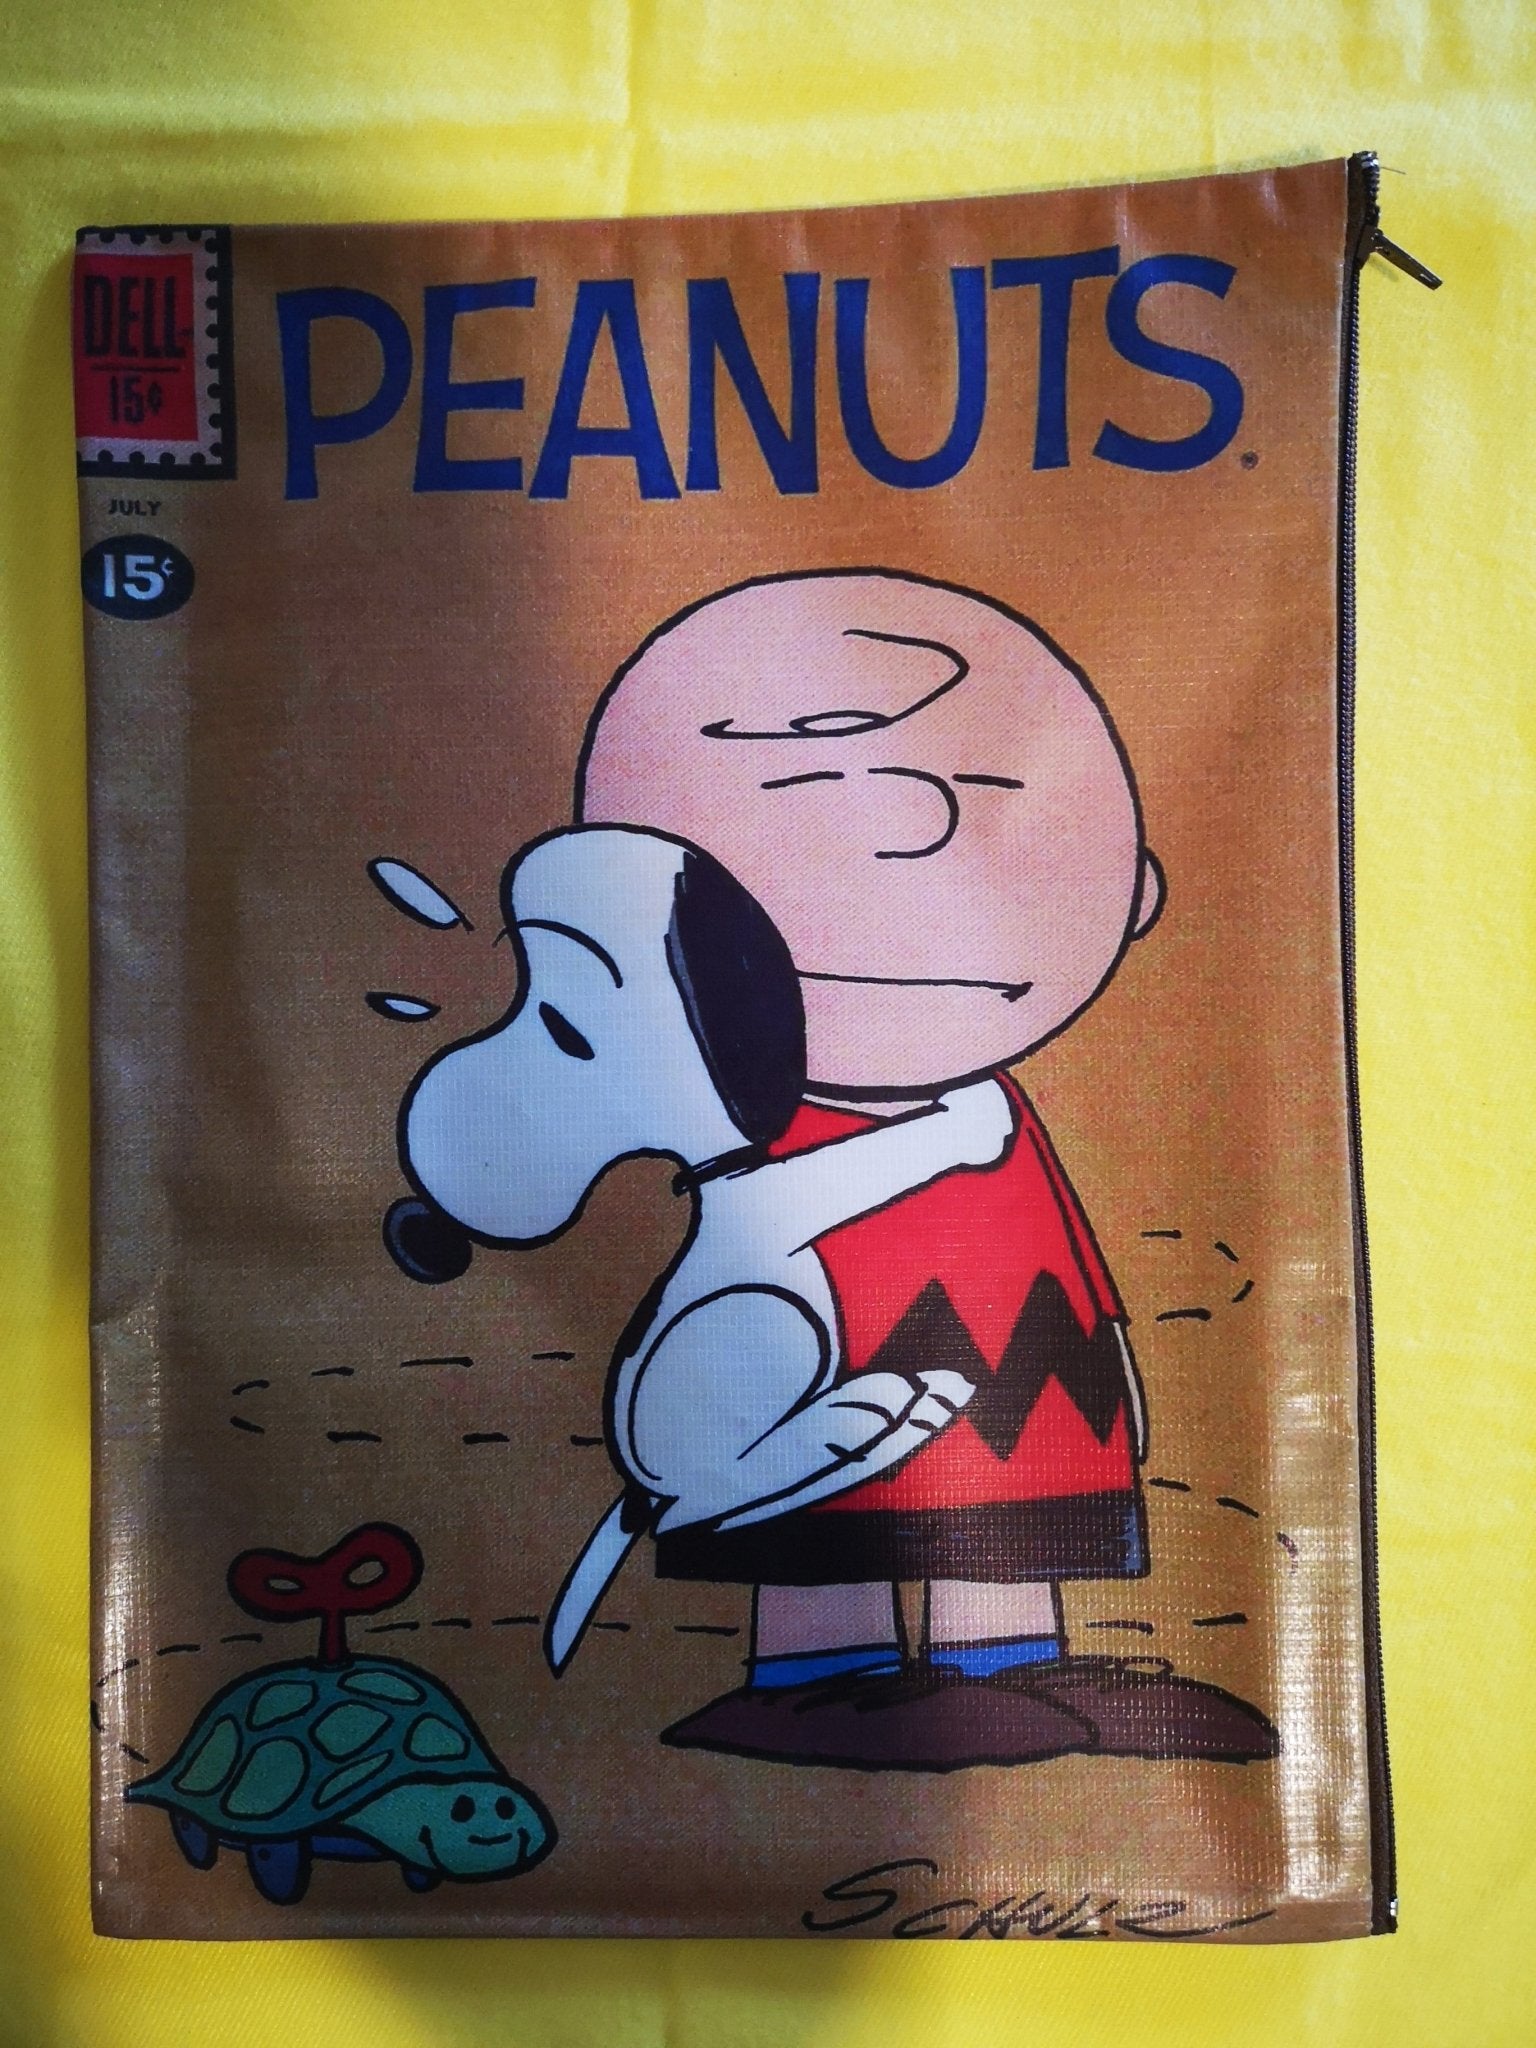 Peanuts cartoon cover clutch